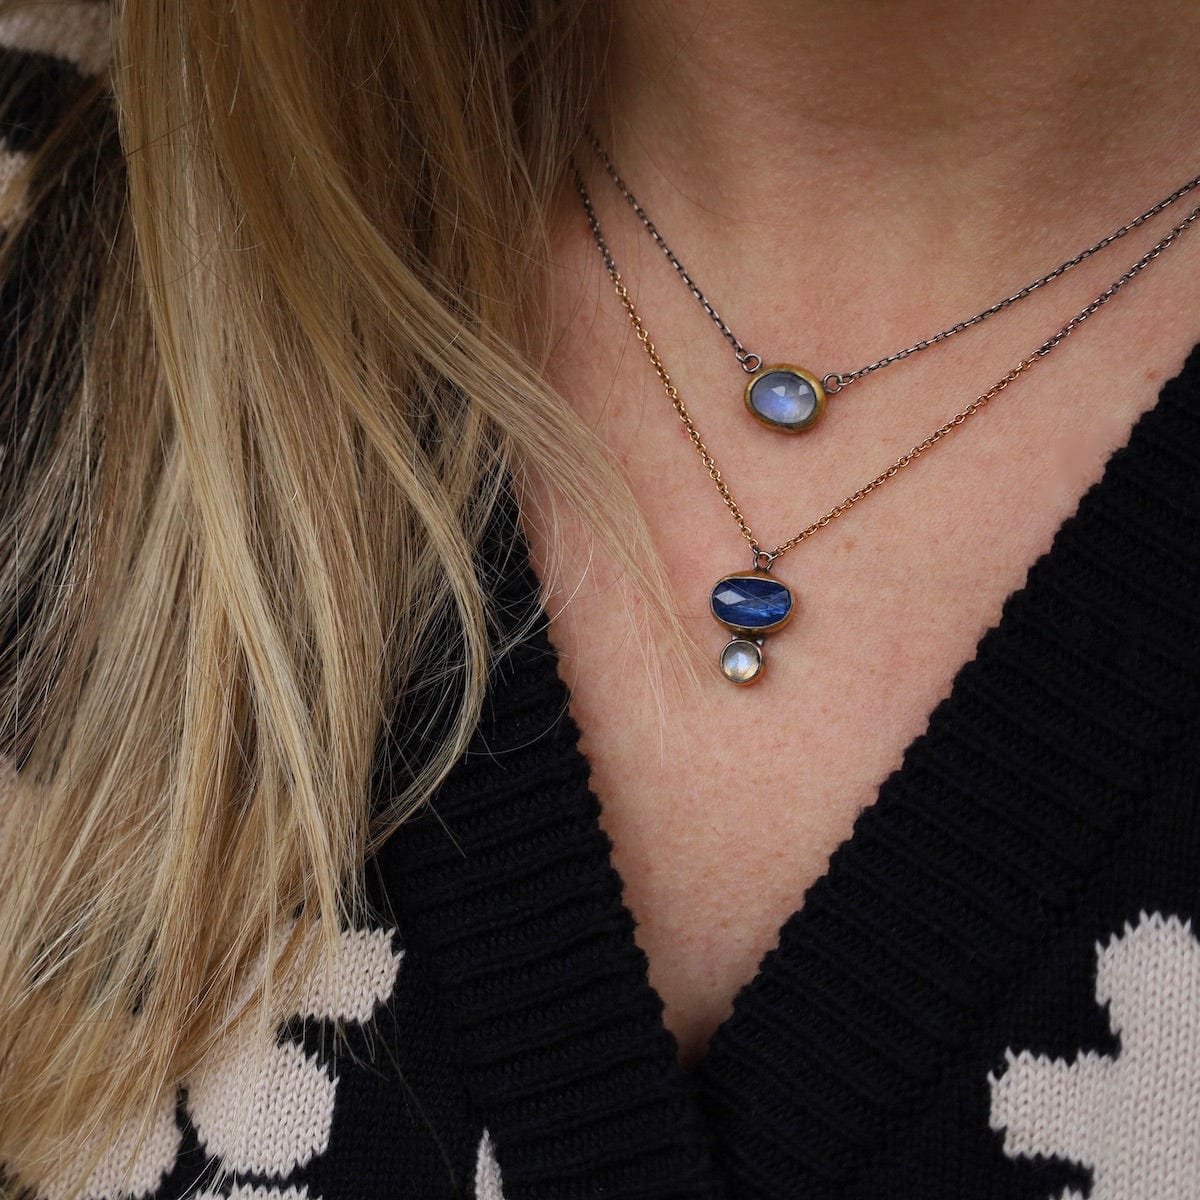 NKL Double Rim Necklace with Split Chain - Blue Kyanit